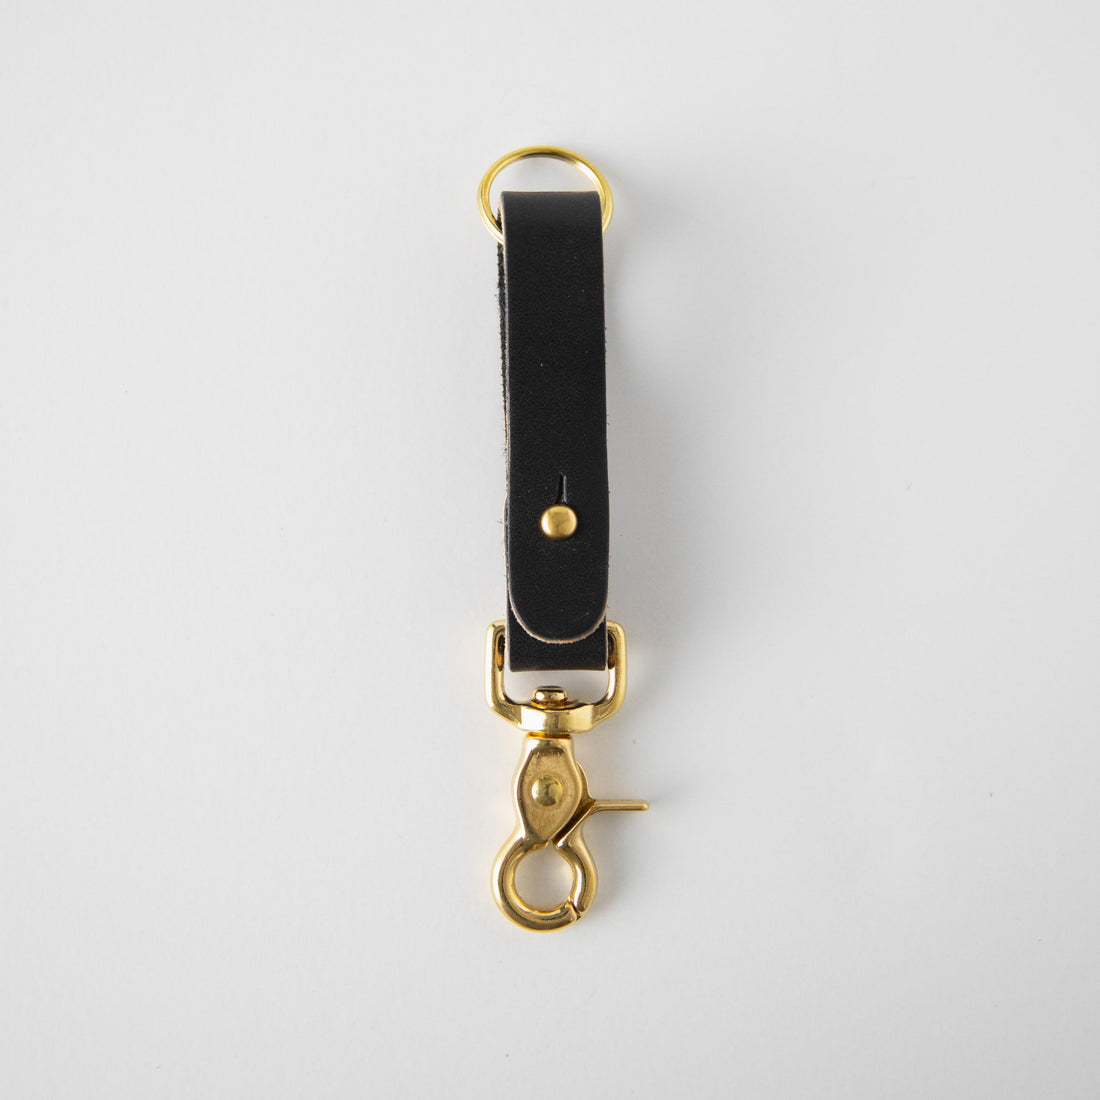 Leather lanyard / black leather keychain